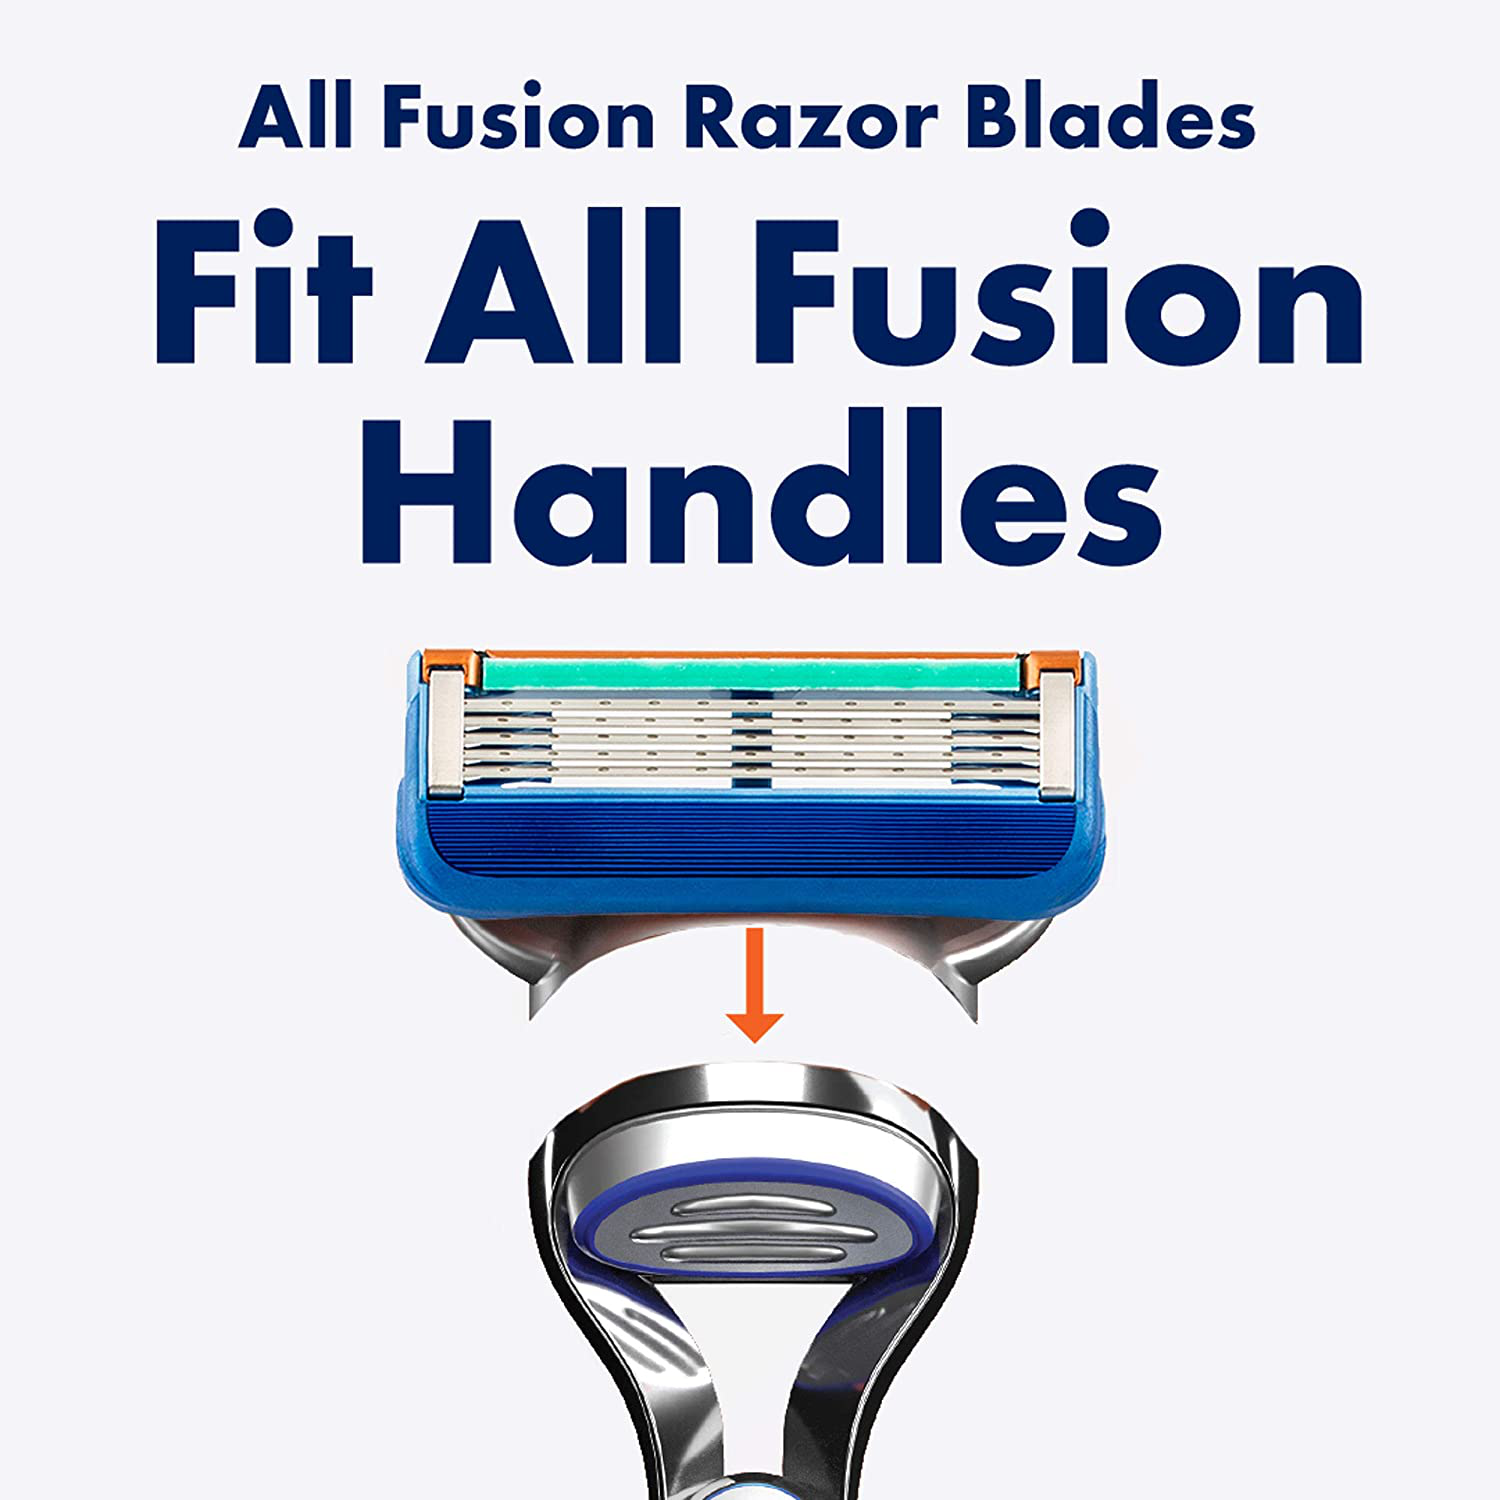 Gillette Fusion Manual Men’s Razor Blade Refills